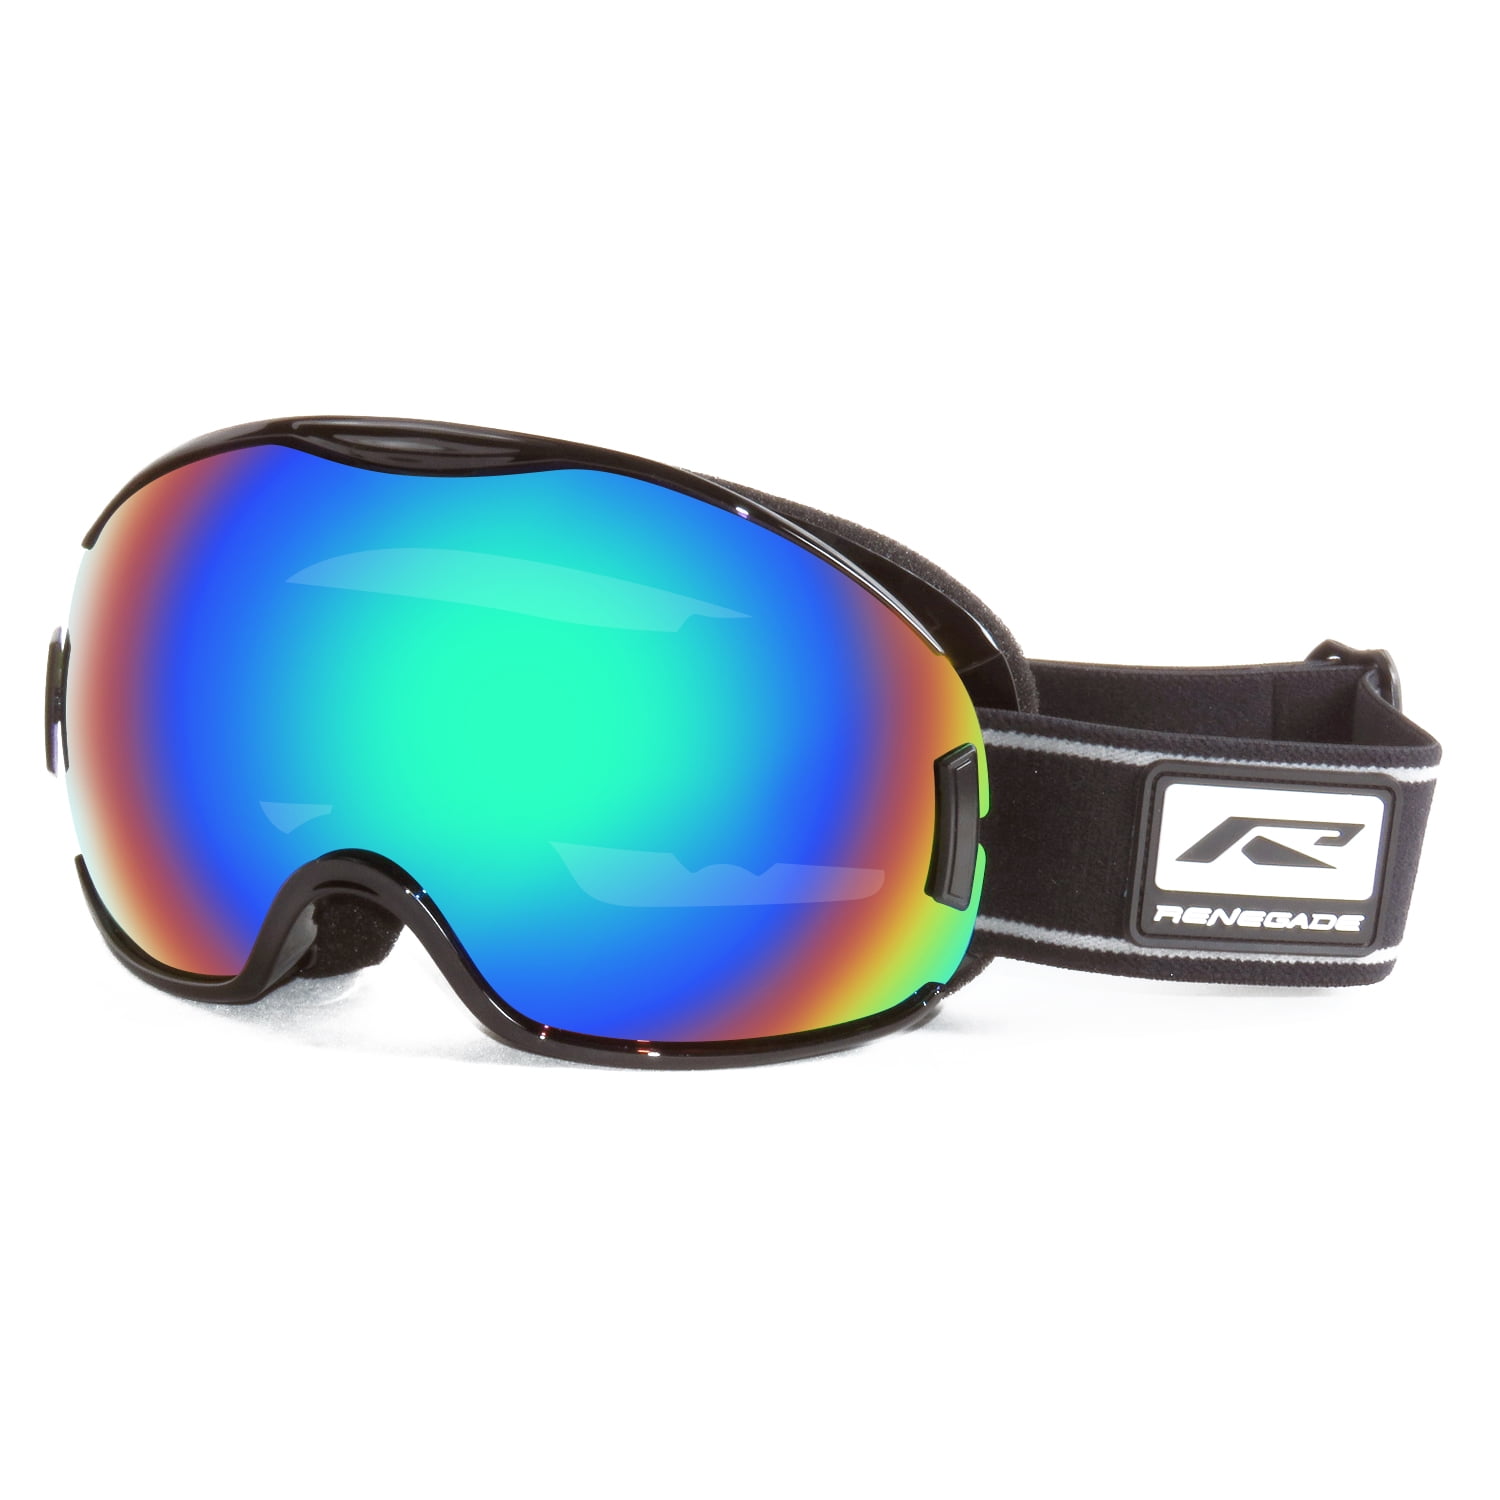 Dragon DXS Ski snowboard Goggles Dragon Alliance Kids $9.99 only black NEW 